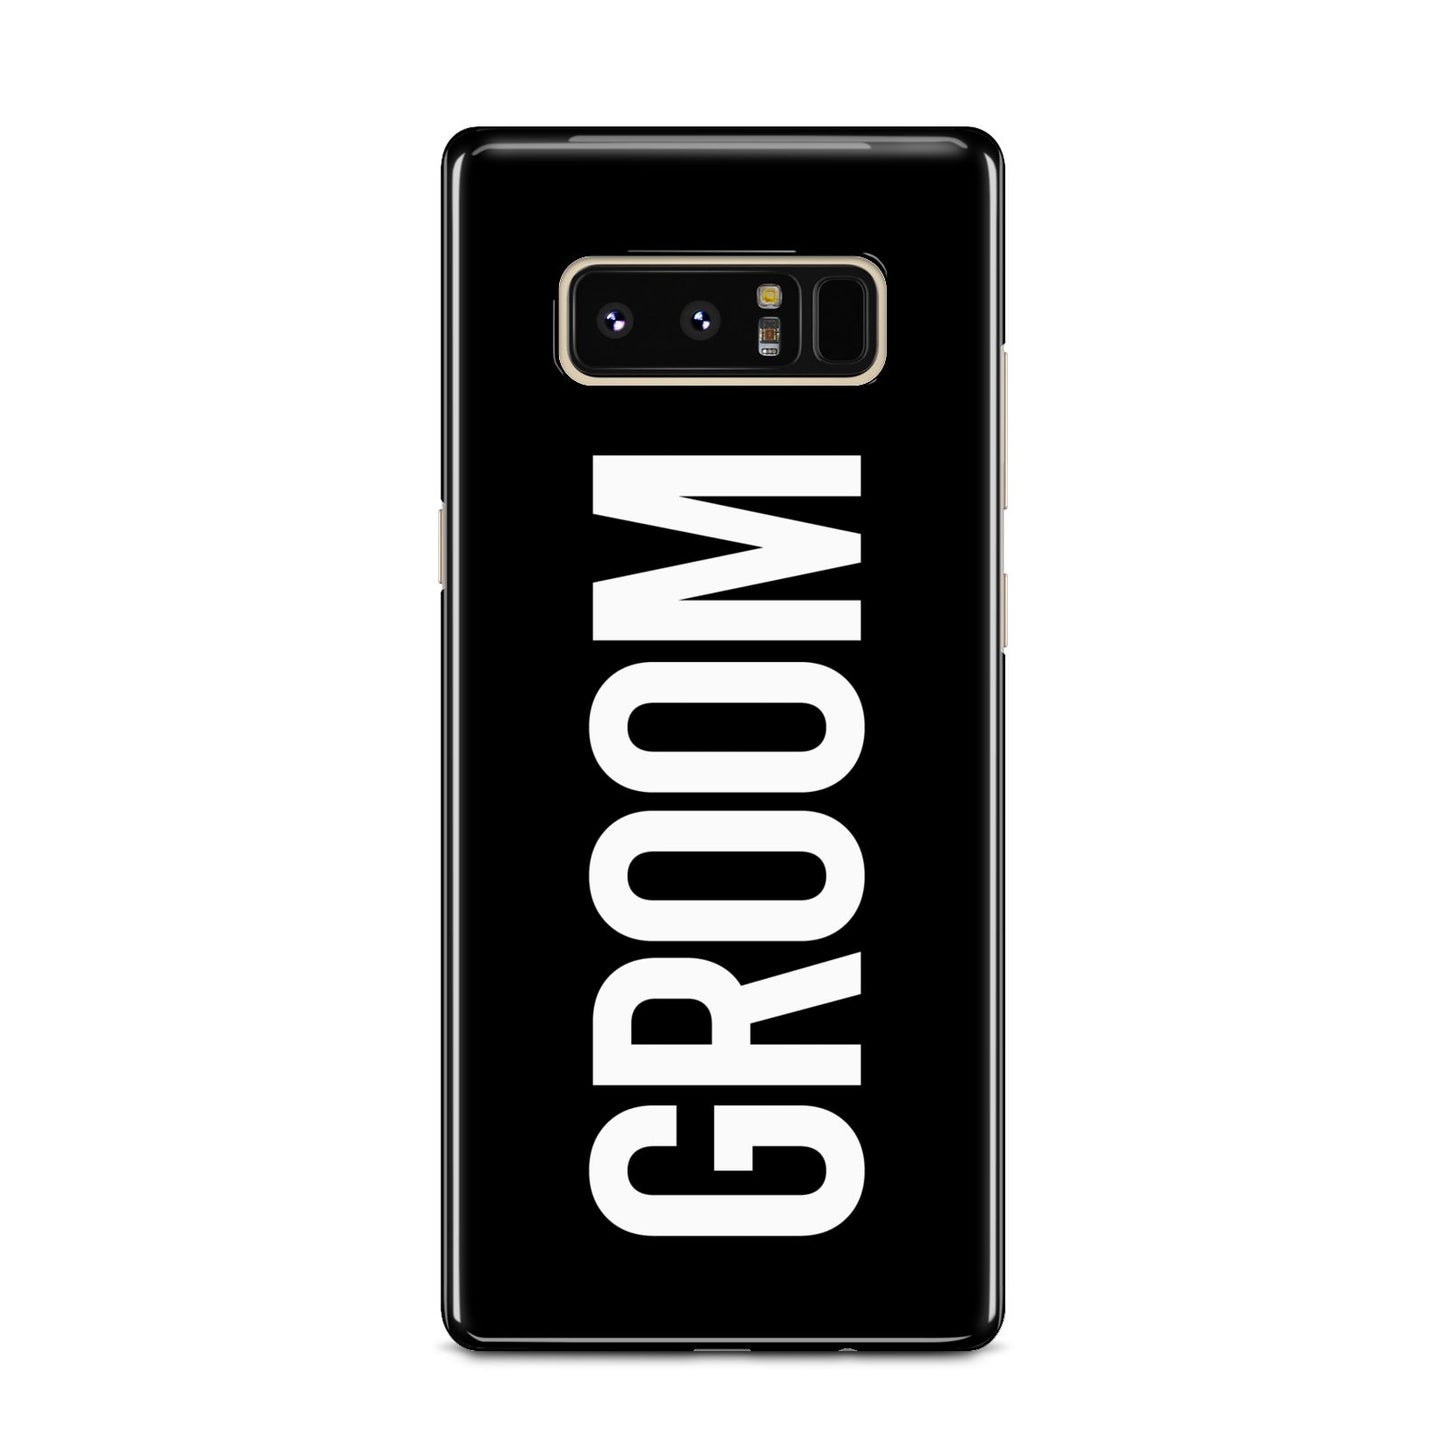 Groom Samsung Galaxy Note 8 Case